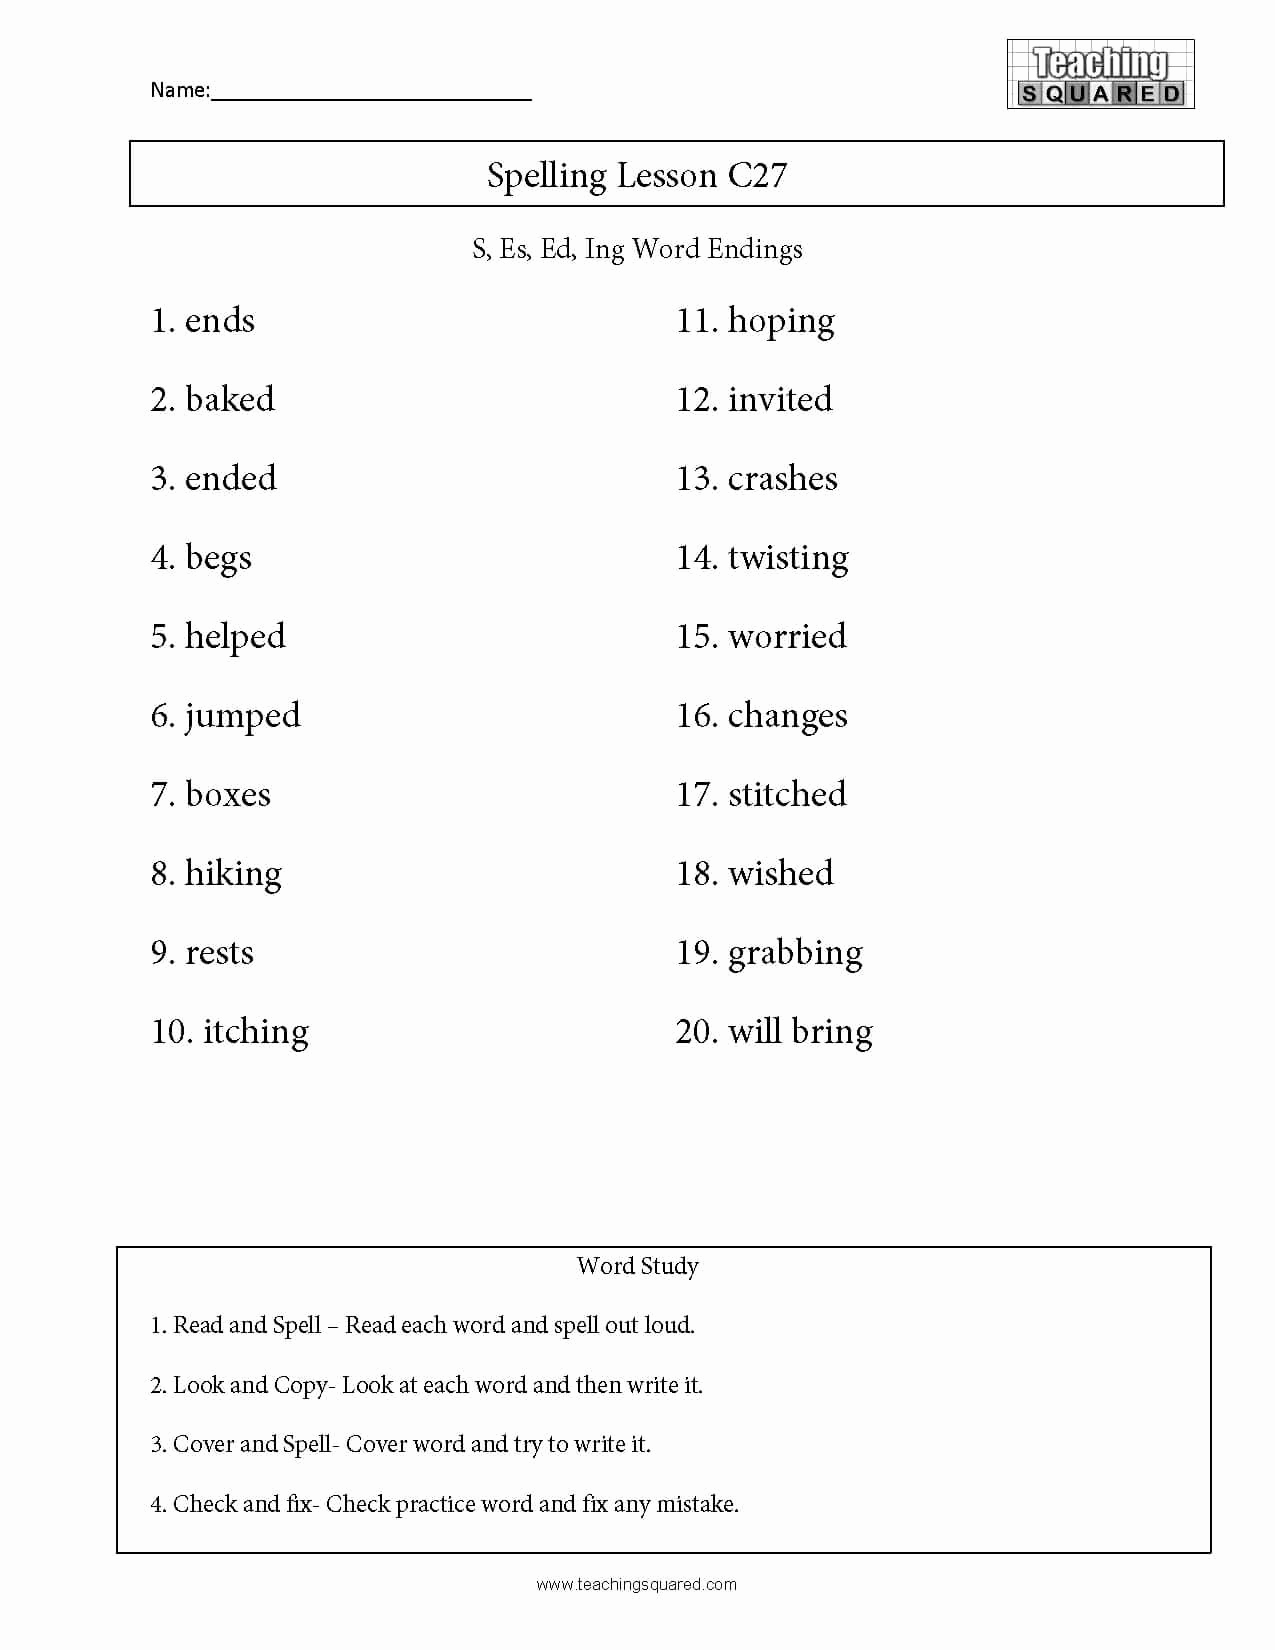 Inflectional Endings Worksheets 2nd Grade Fresh 20 Inflectional Endings Worksheets 2nd Grade